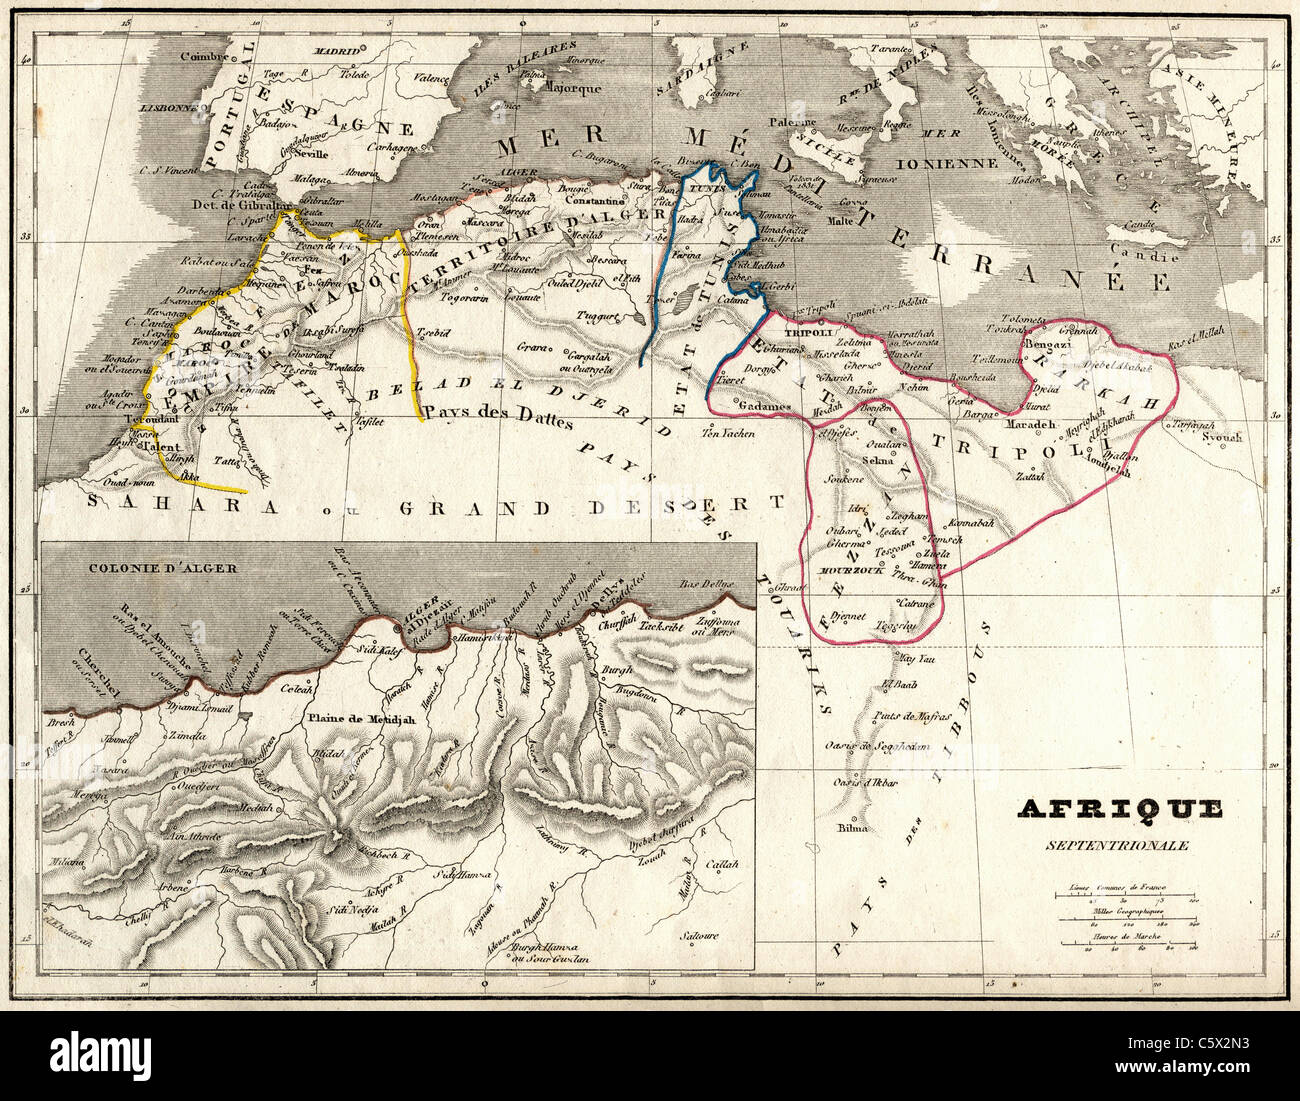 Afrique Septentrionale (Nord Africa) antiquario mappa da "Atlas Universel de Geographie Ancienne e Moderne' dal cartografo C. V. Monin Foto Stock